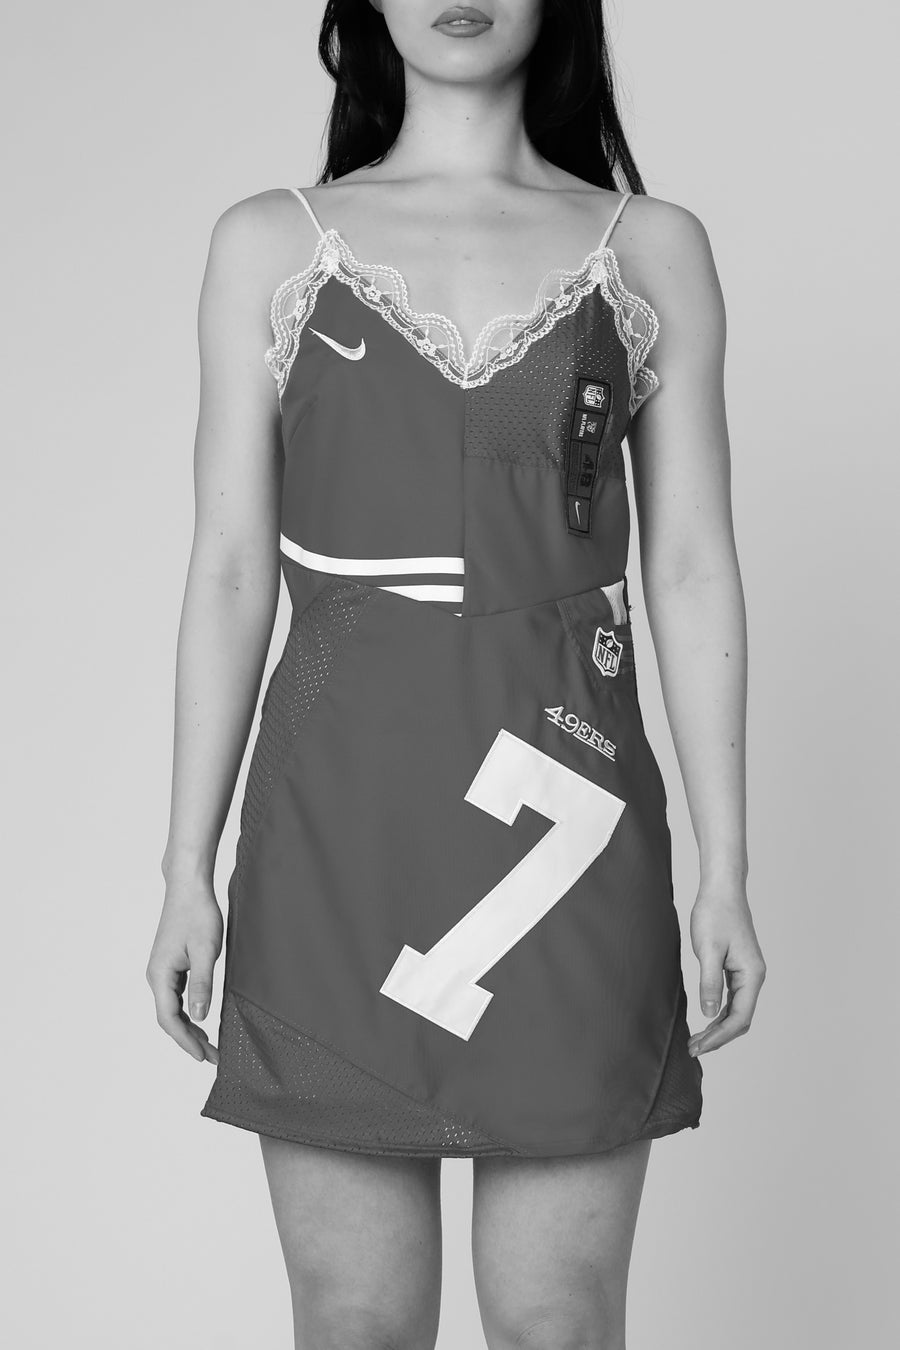 Rework NBA Lace Dress - S